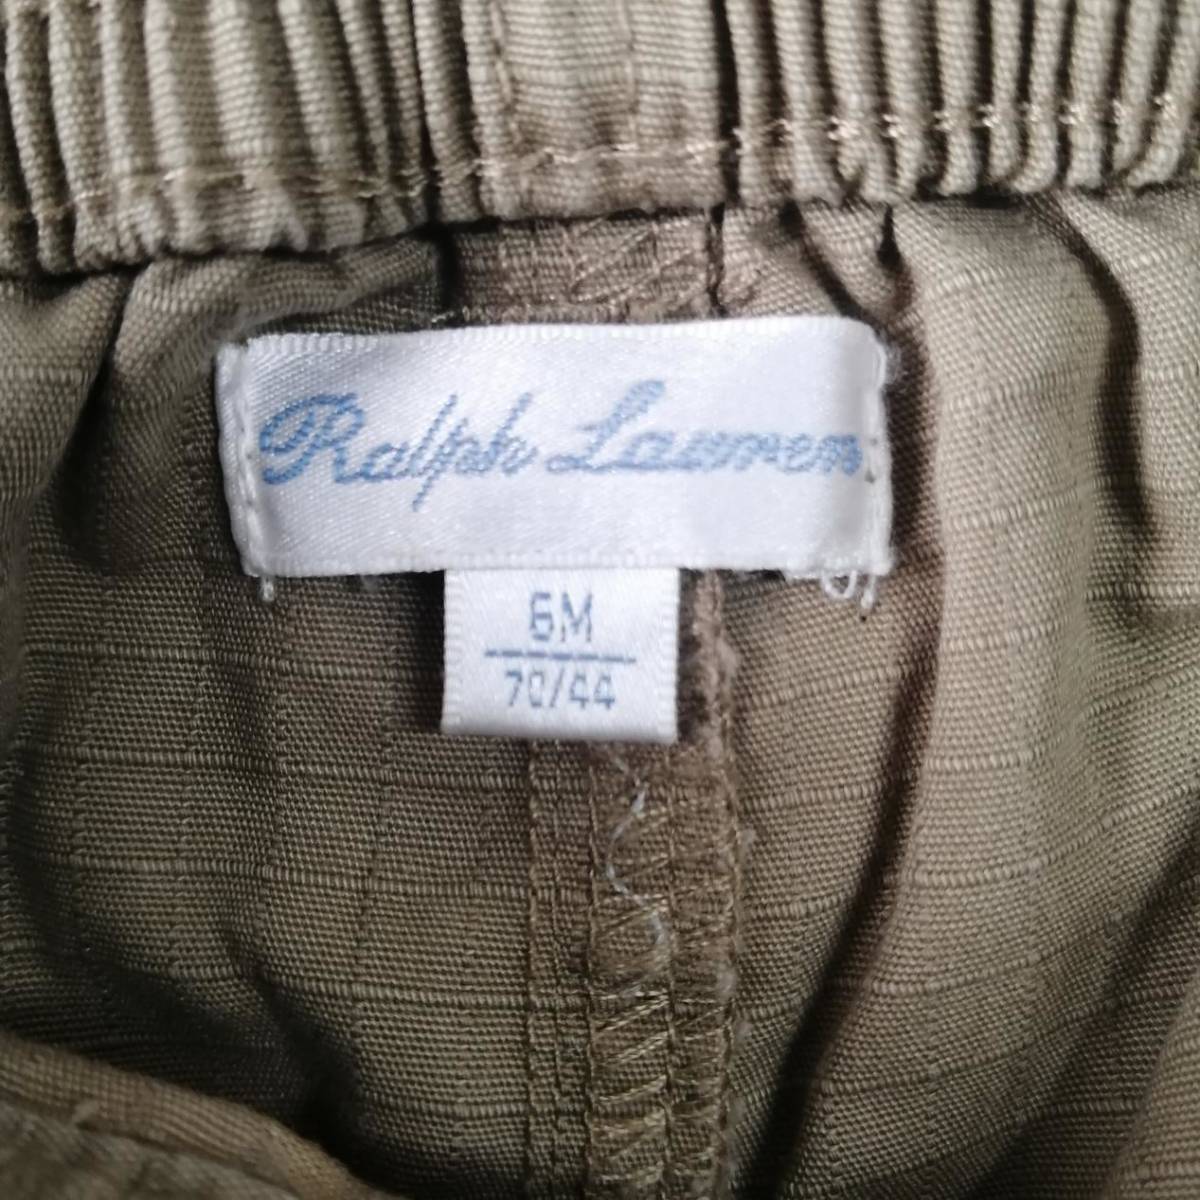 [ beautiful goods ] baby clothes RALPH LAUREN 6M 70/44 Ralph Lauren setup top and bottom set check pattern long sleeve shirt child clothes Kids clothes 